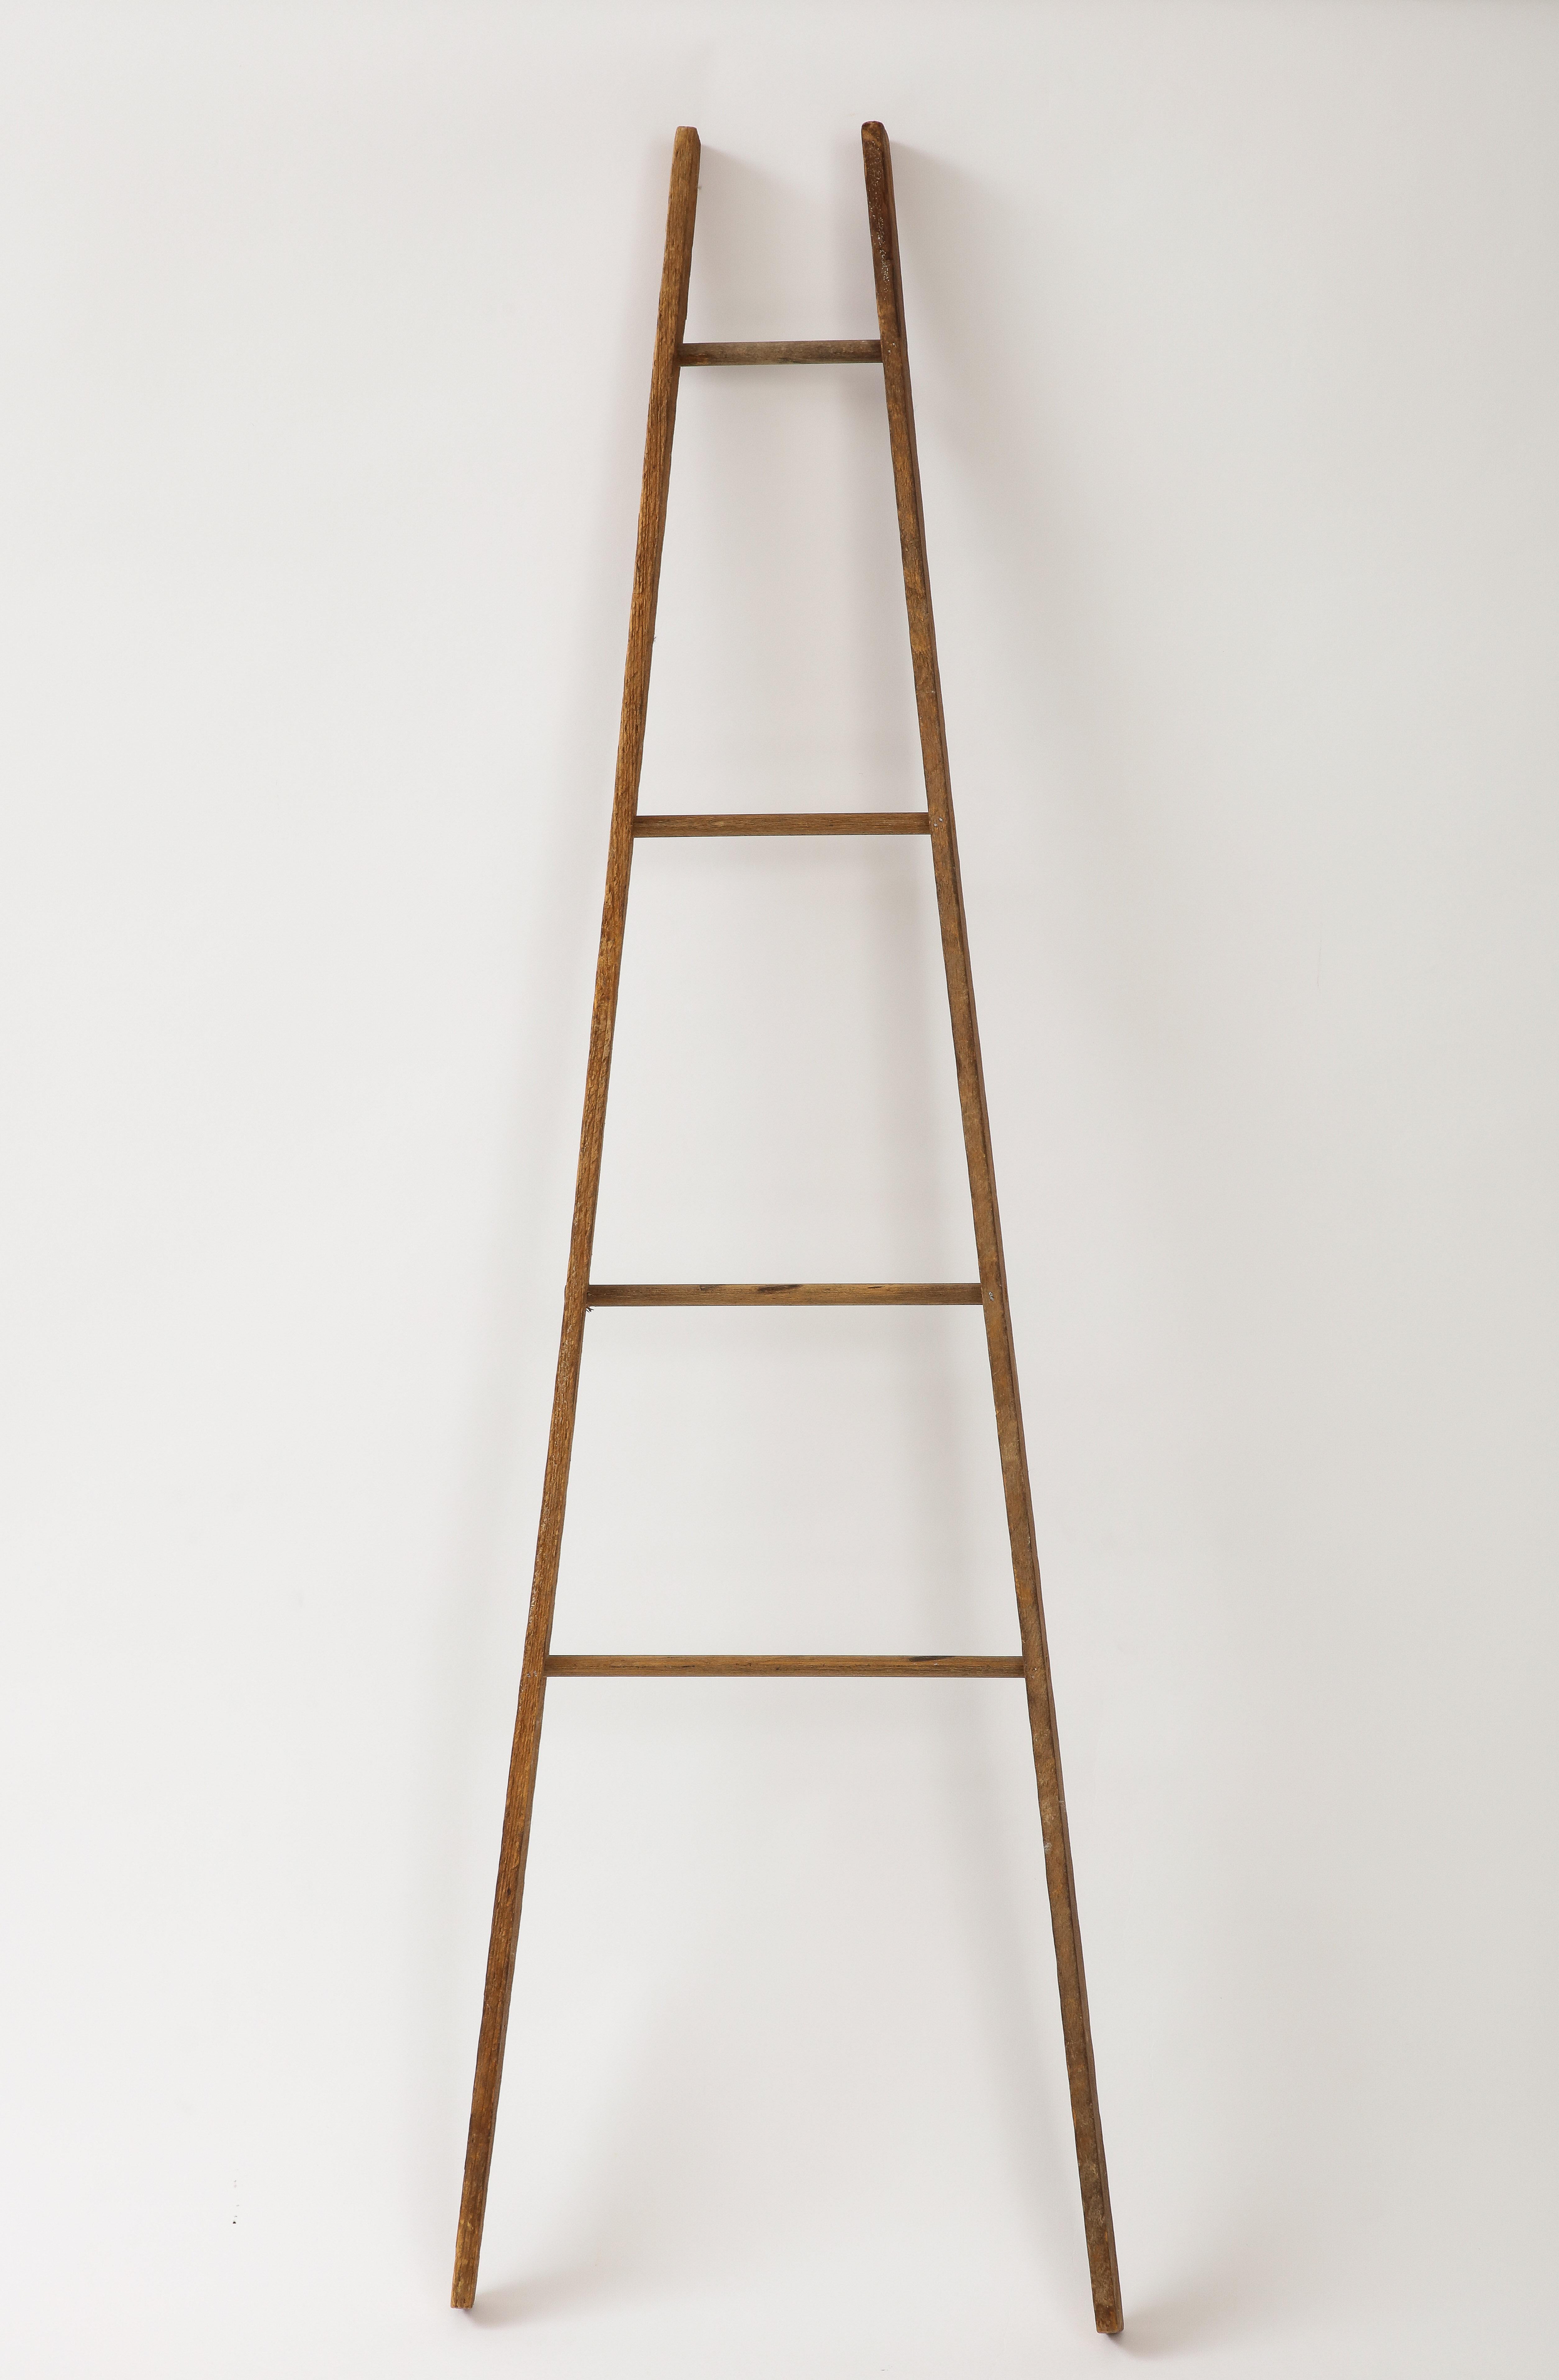 Folk Art American 19th C. Ladder Model For Sale